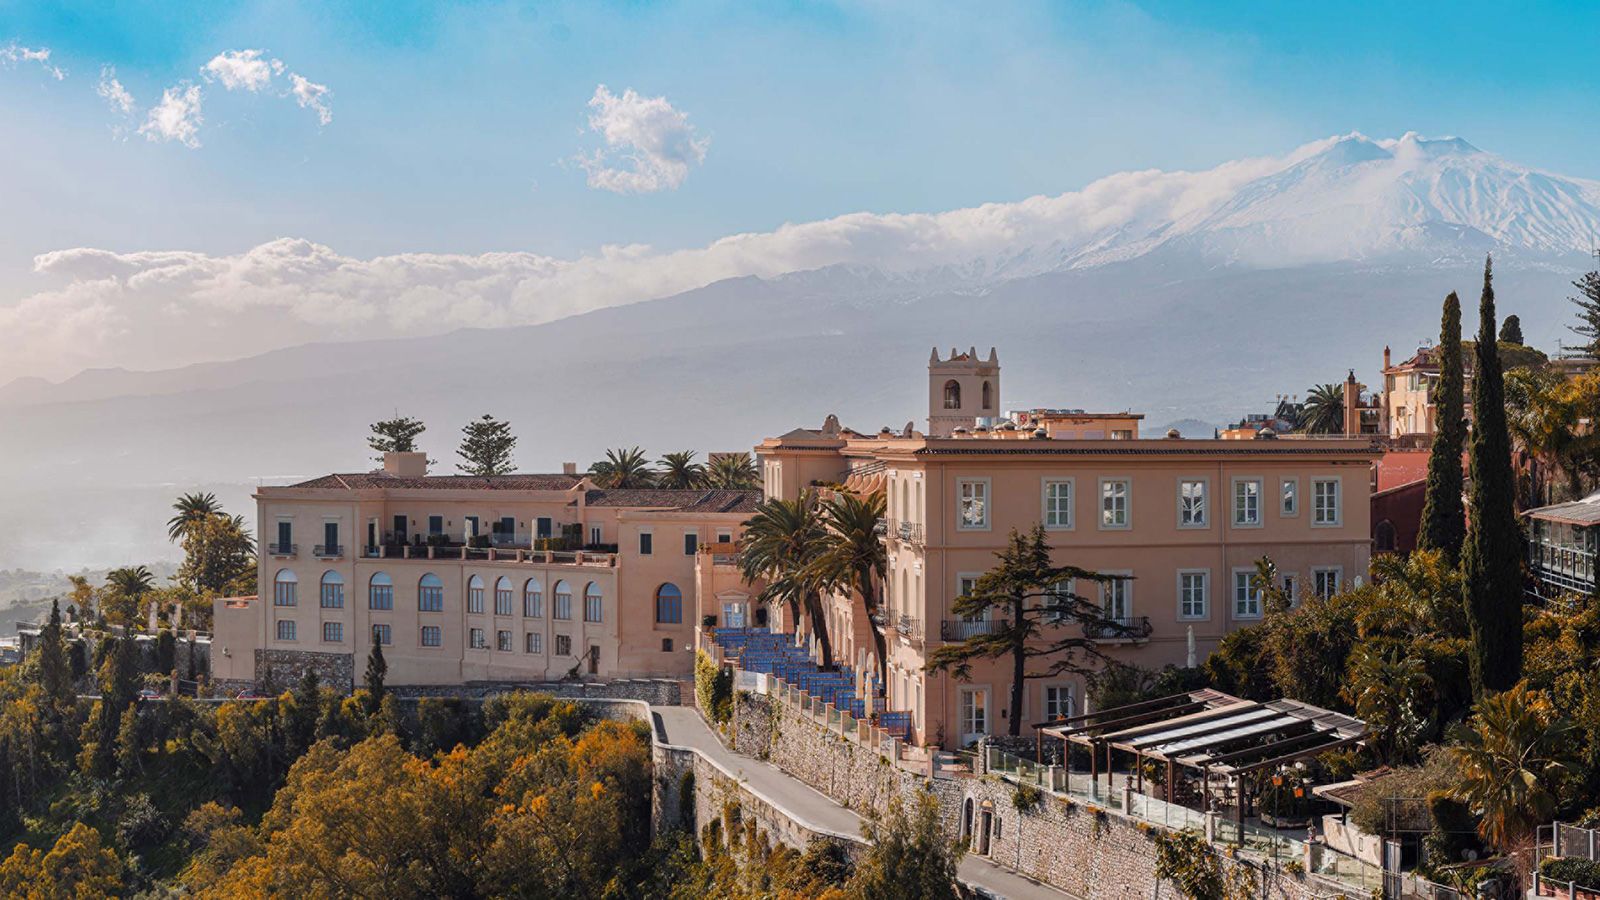 Grand Hotel Timeo, A Belmond Hotel- Deluxe Taormina, Sicily Island